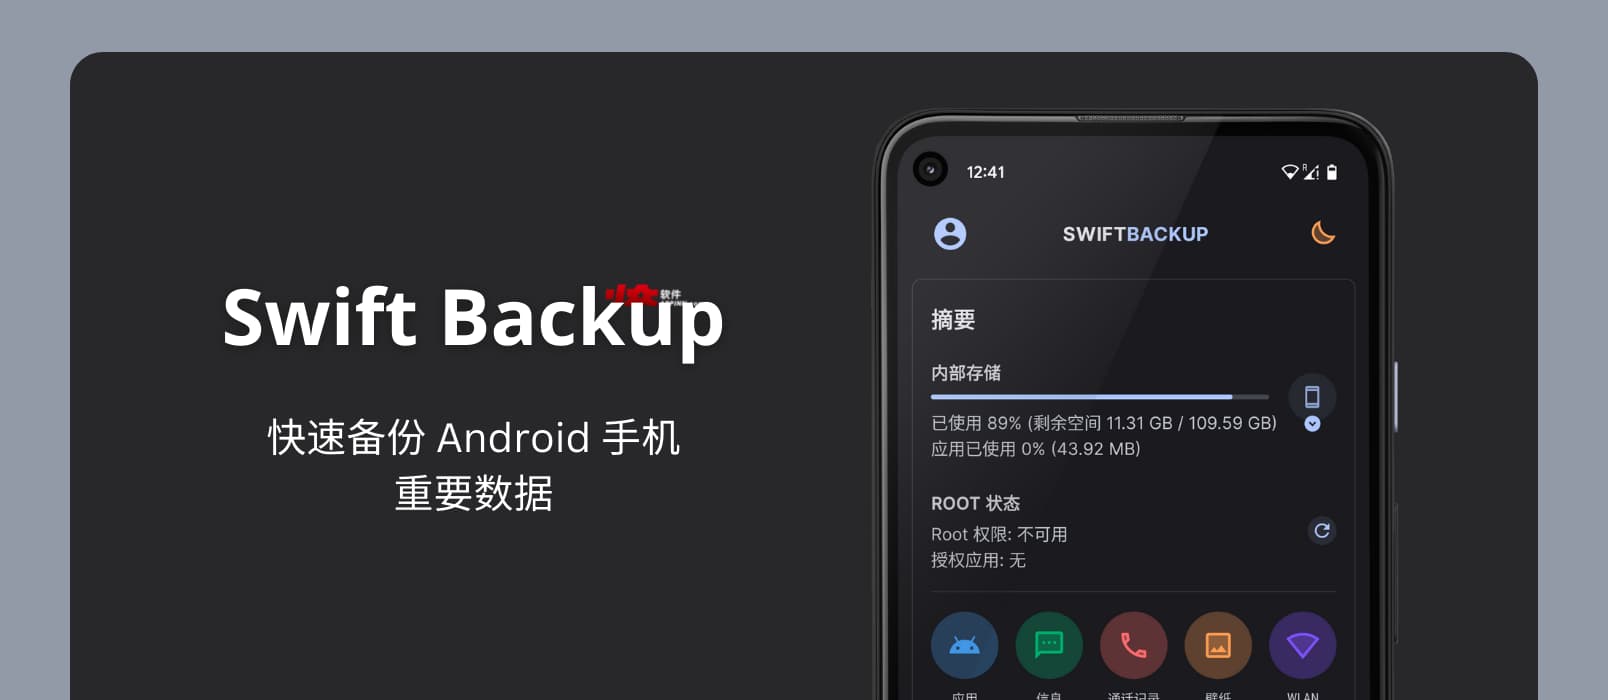 Swift Backup - 备份 Android 手机重要数据，包括短信、通信记录、壁纸、旧版应用等